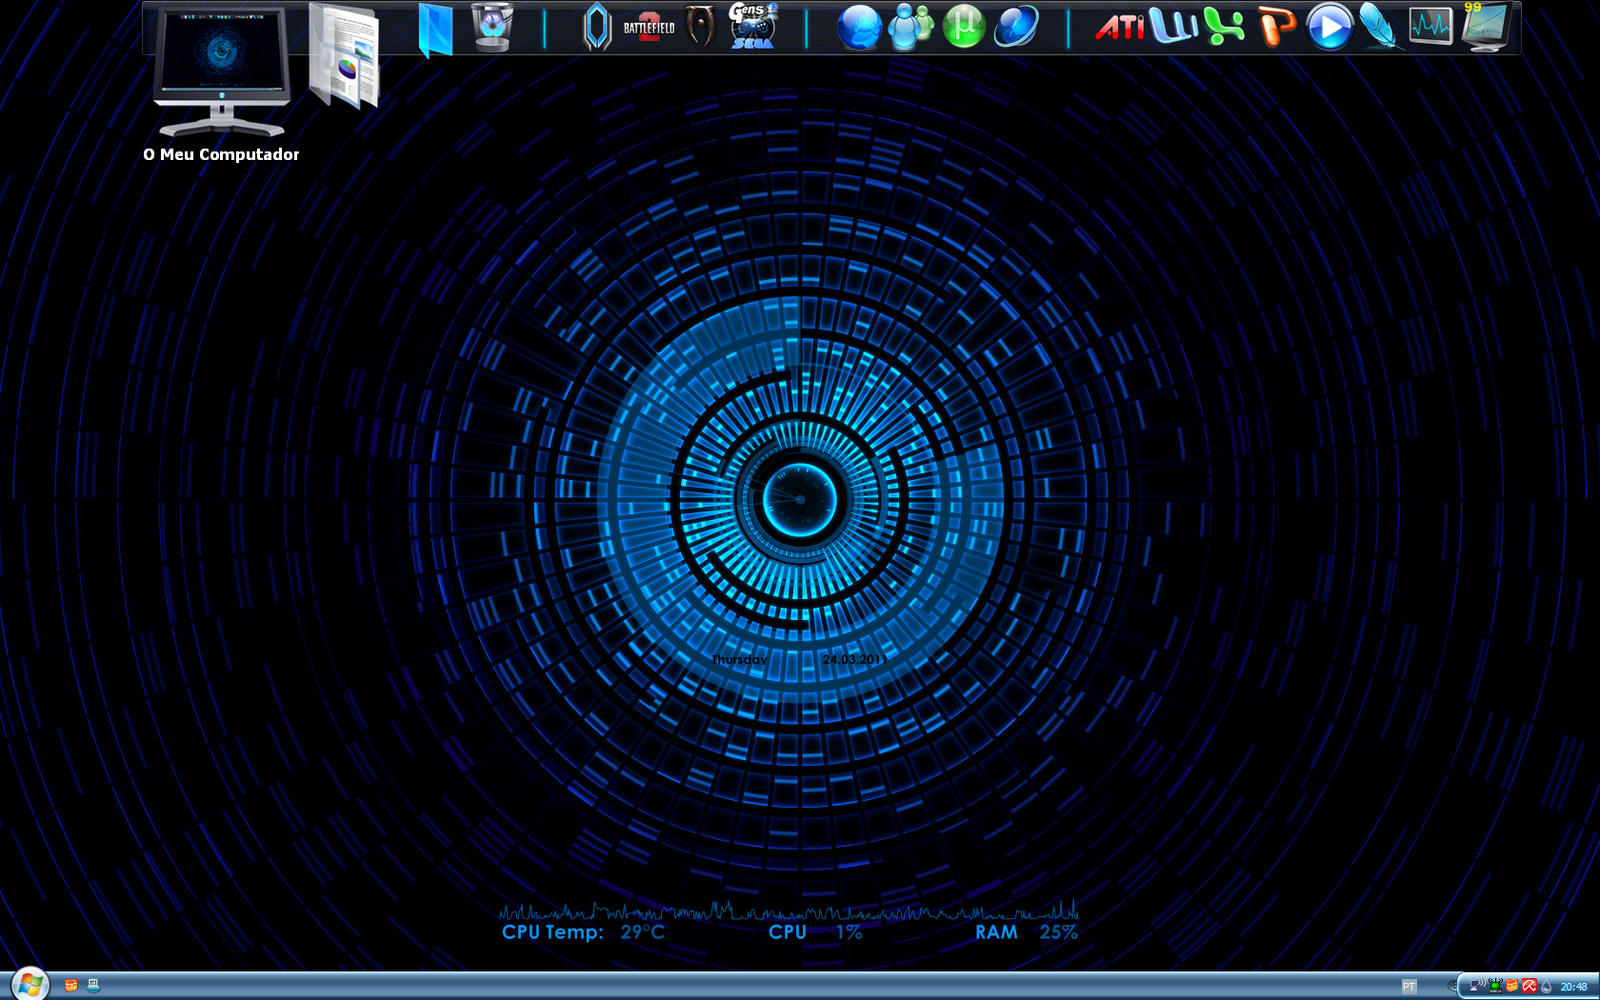 new_desktop_by_kireekpso-d3cd7kp.jpg